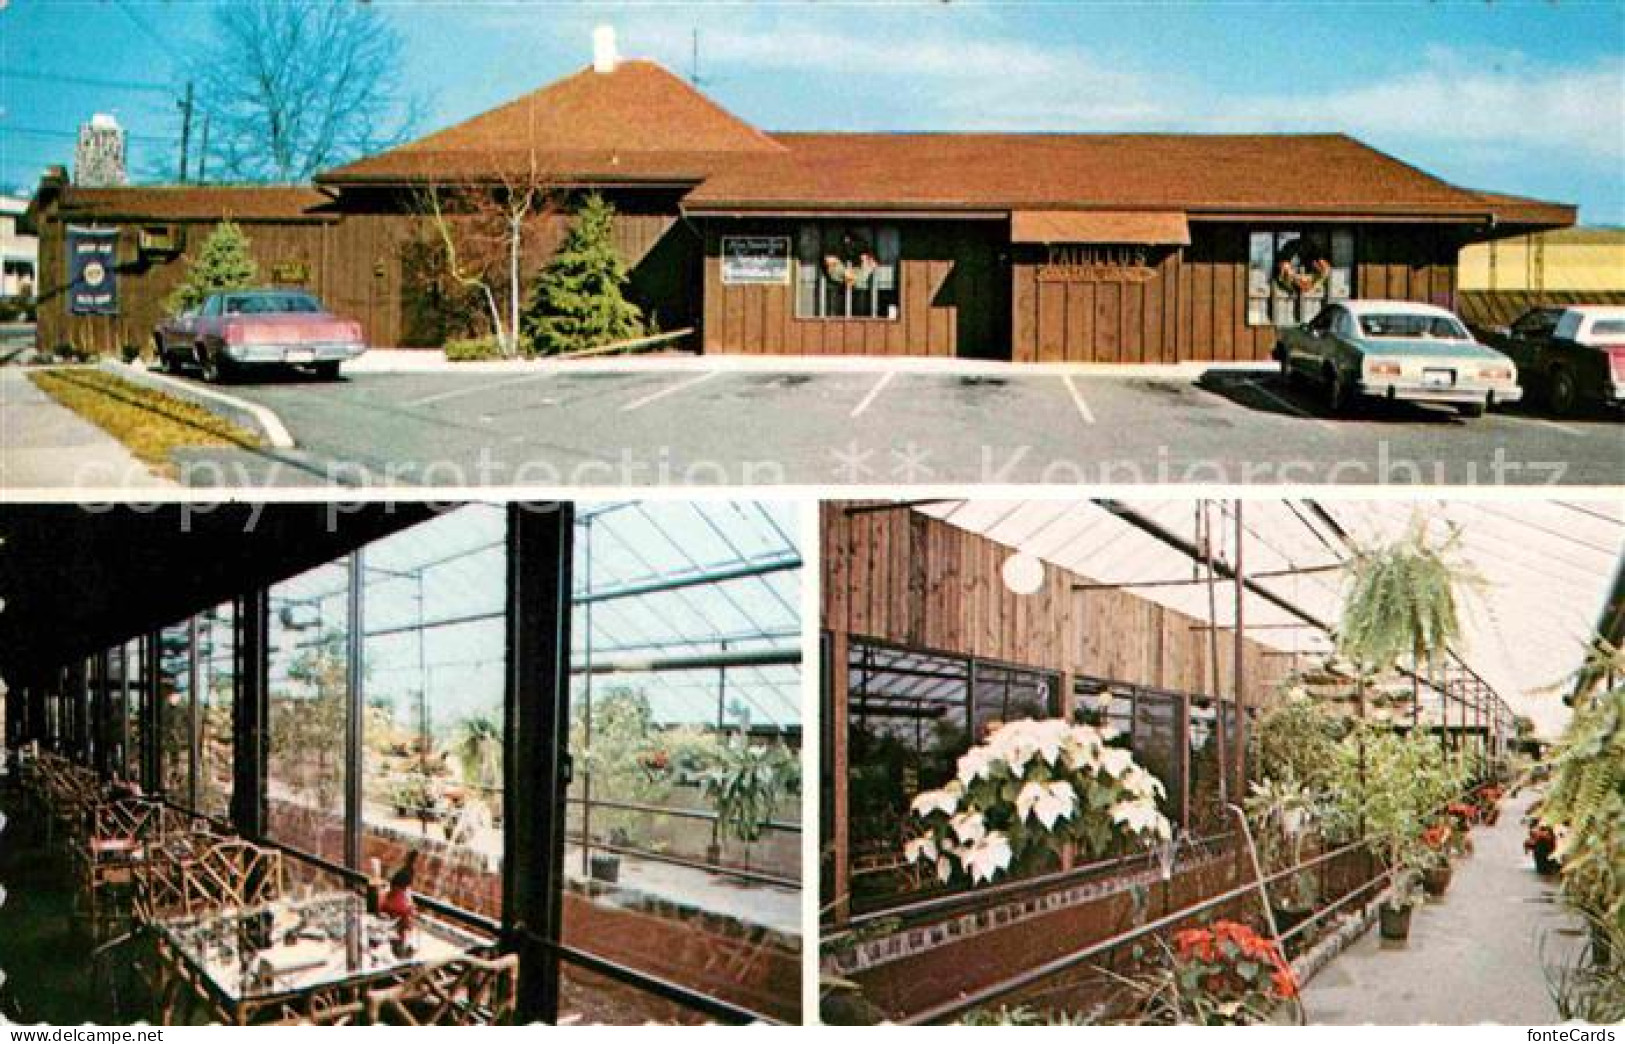 12637218 Bound_Brook Herb Patullos Original Greenhouse Restaurant - Altri & Non Classificati